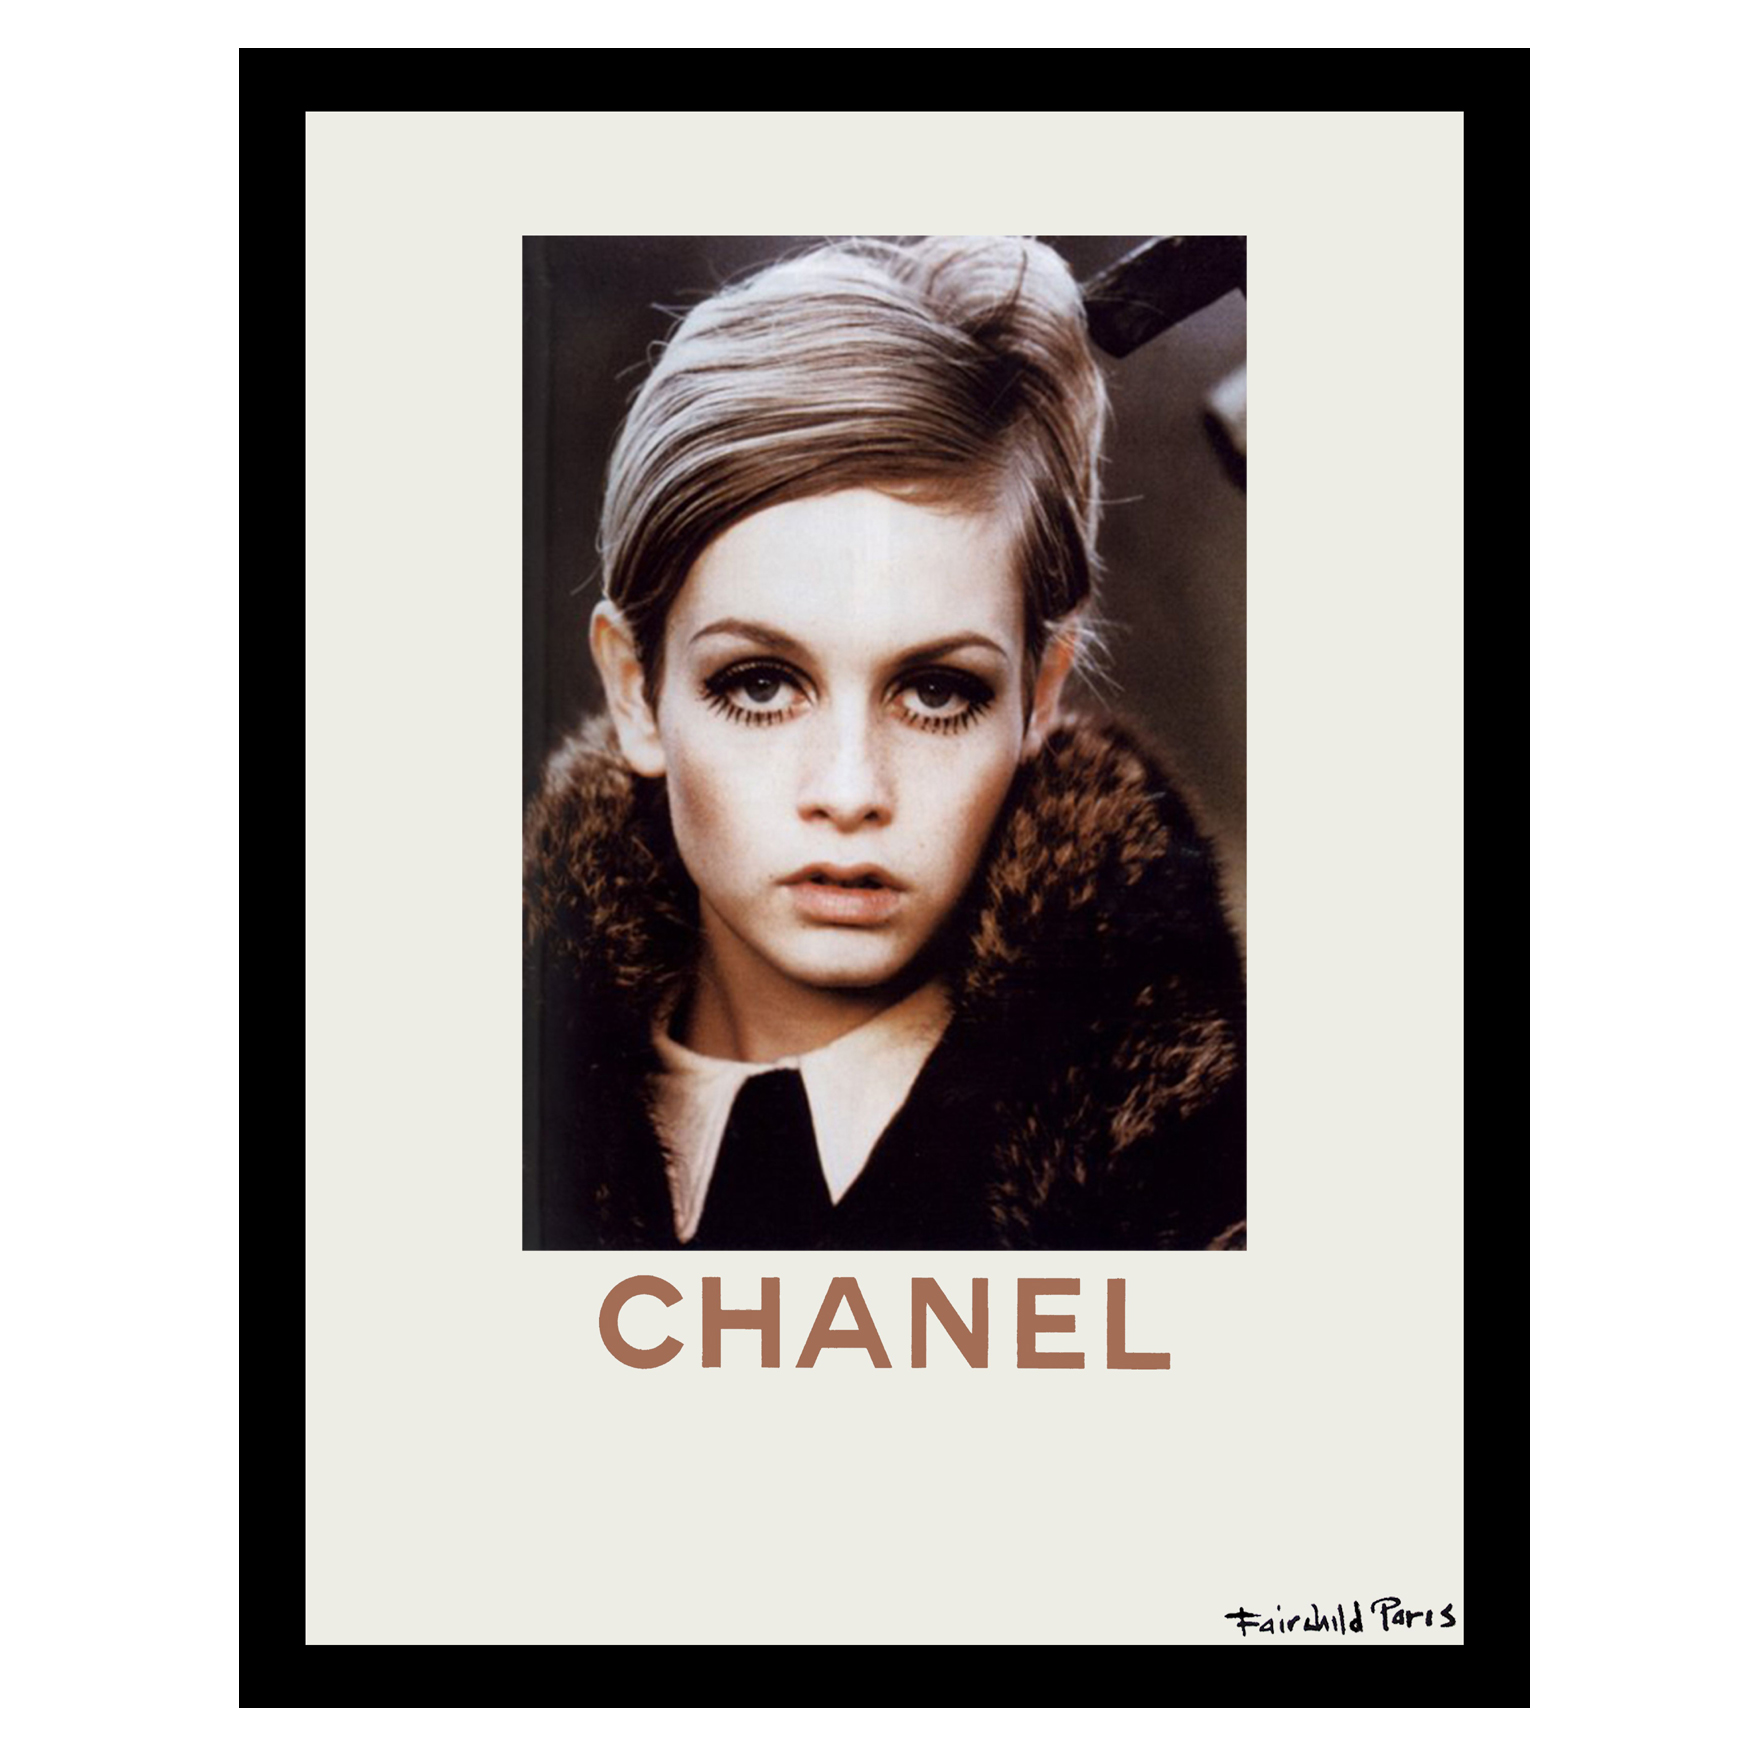 Chanel Twiggy Fur Look - Beige / Brown - 14x18 Framed Print, BEIGE BROWN